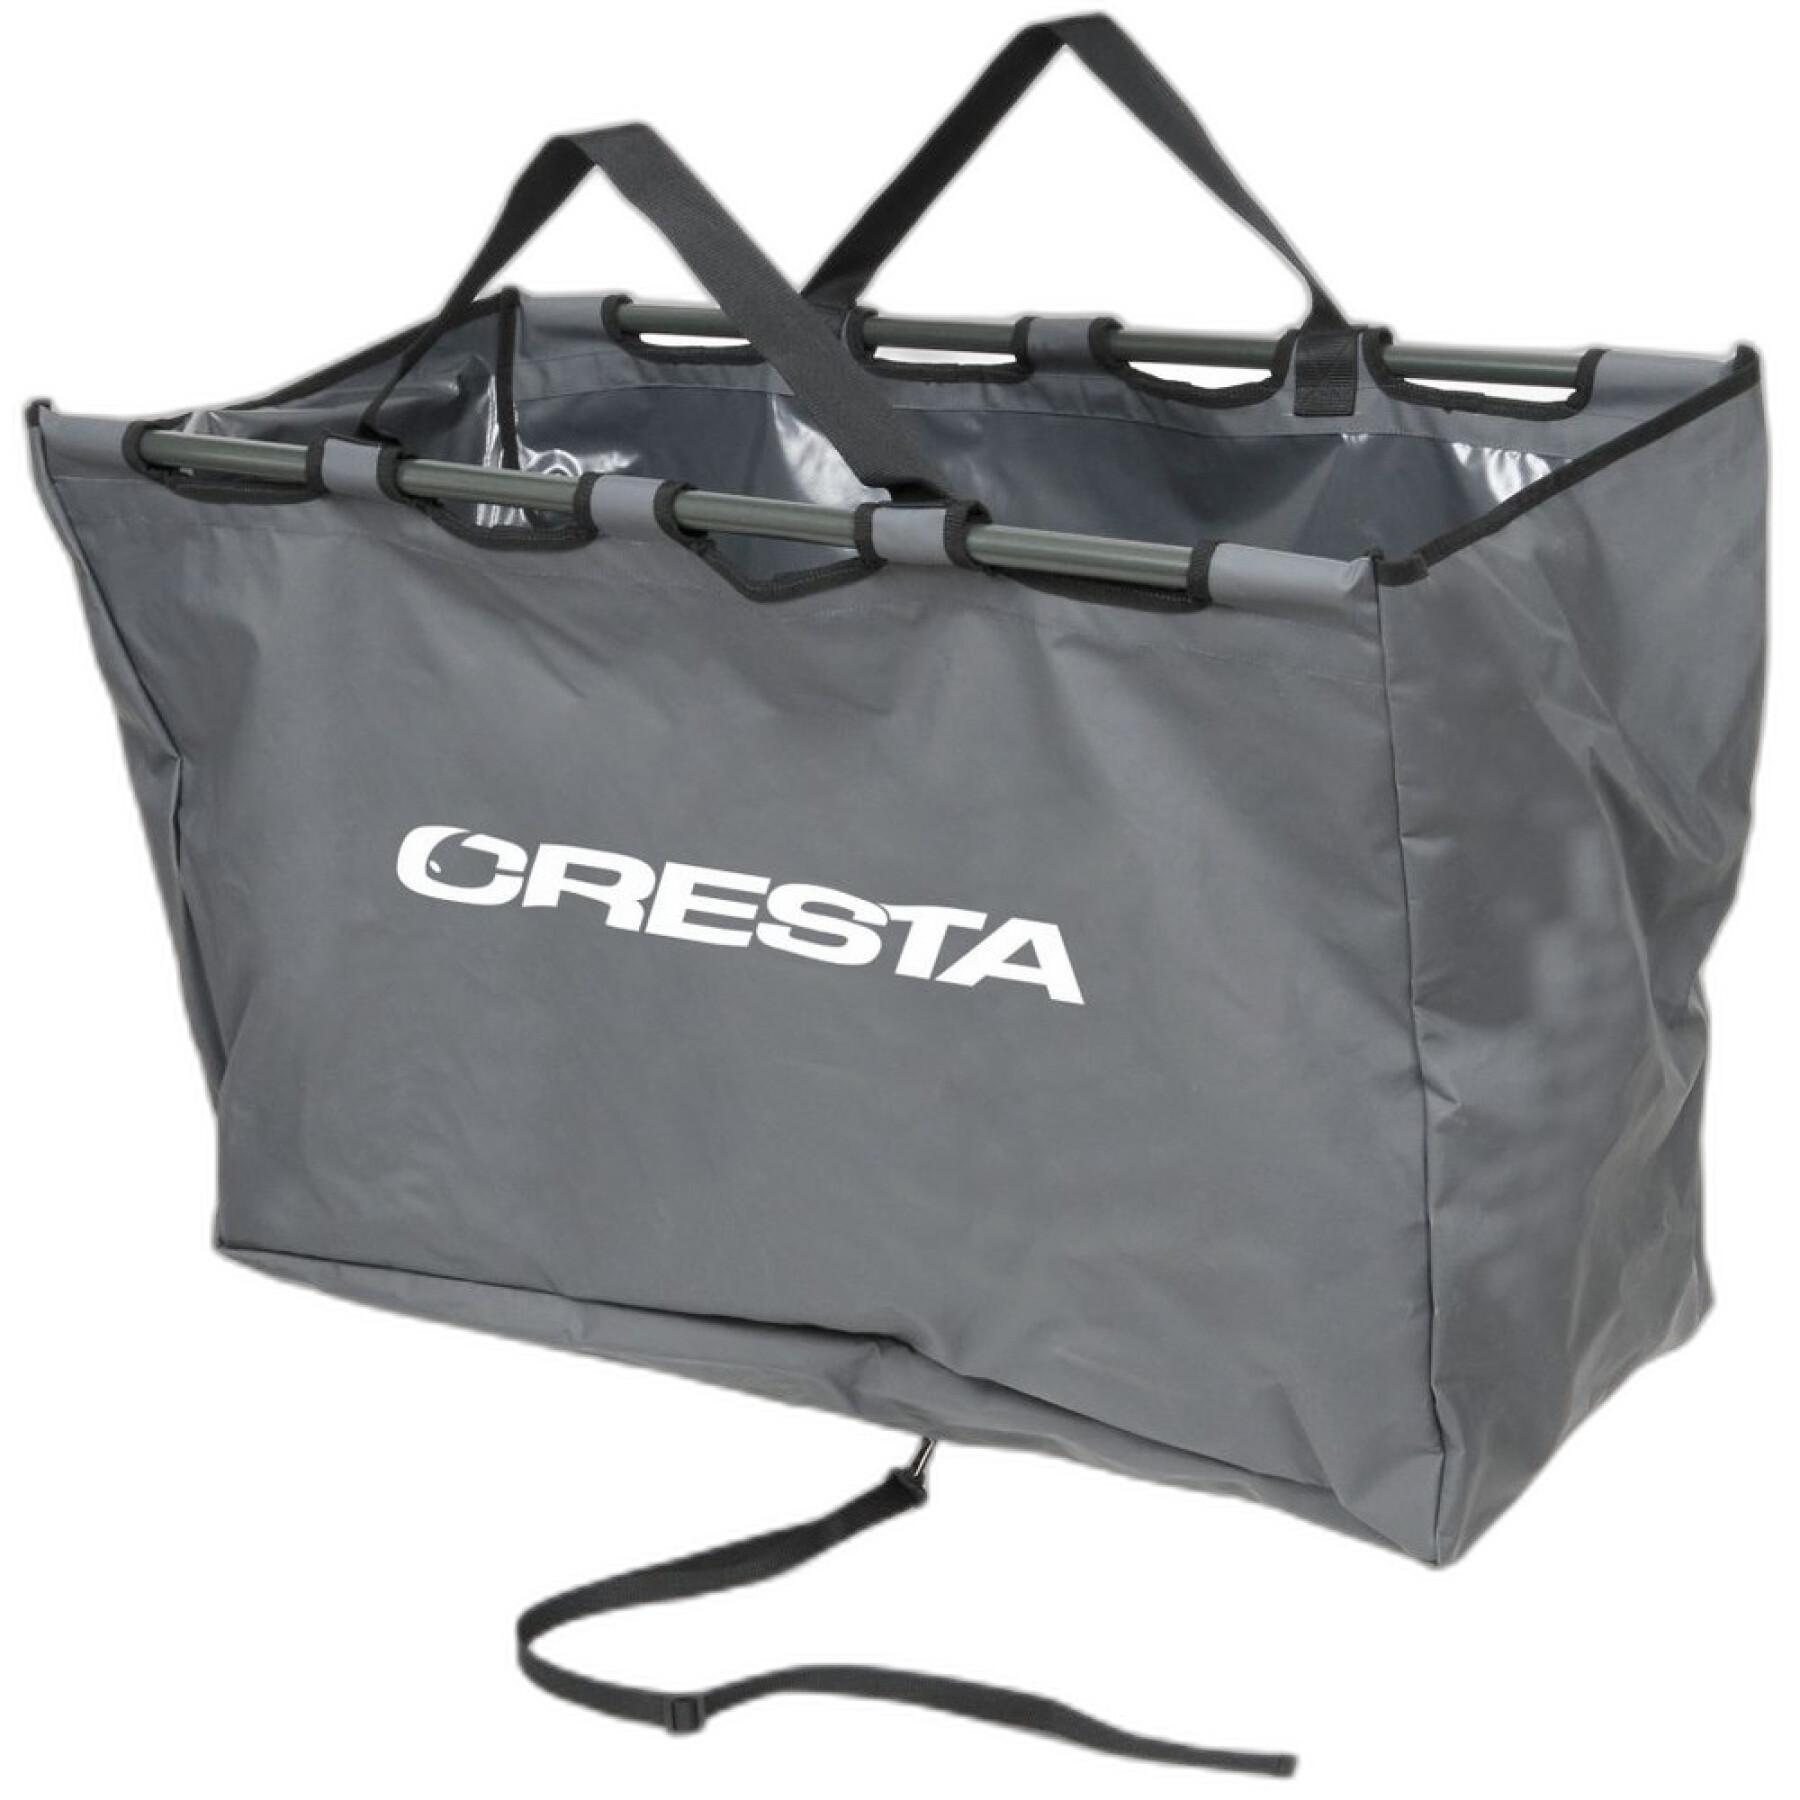 Weighing bag Cresta heavy duty M